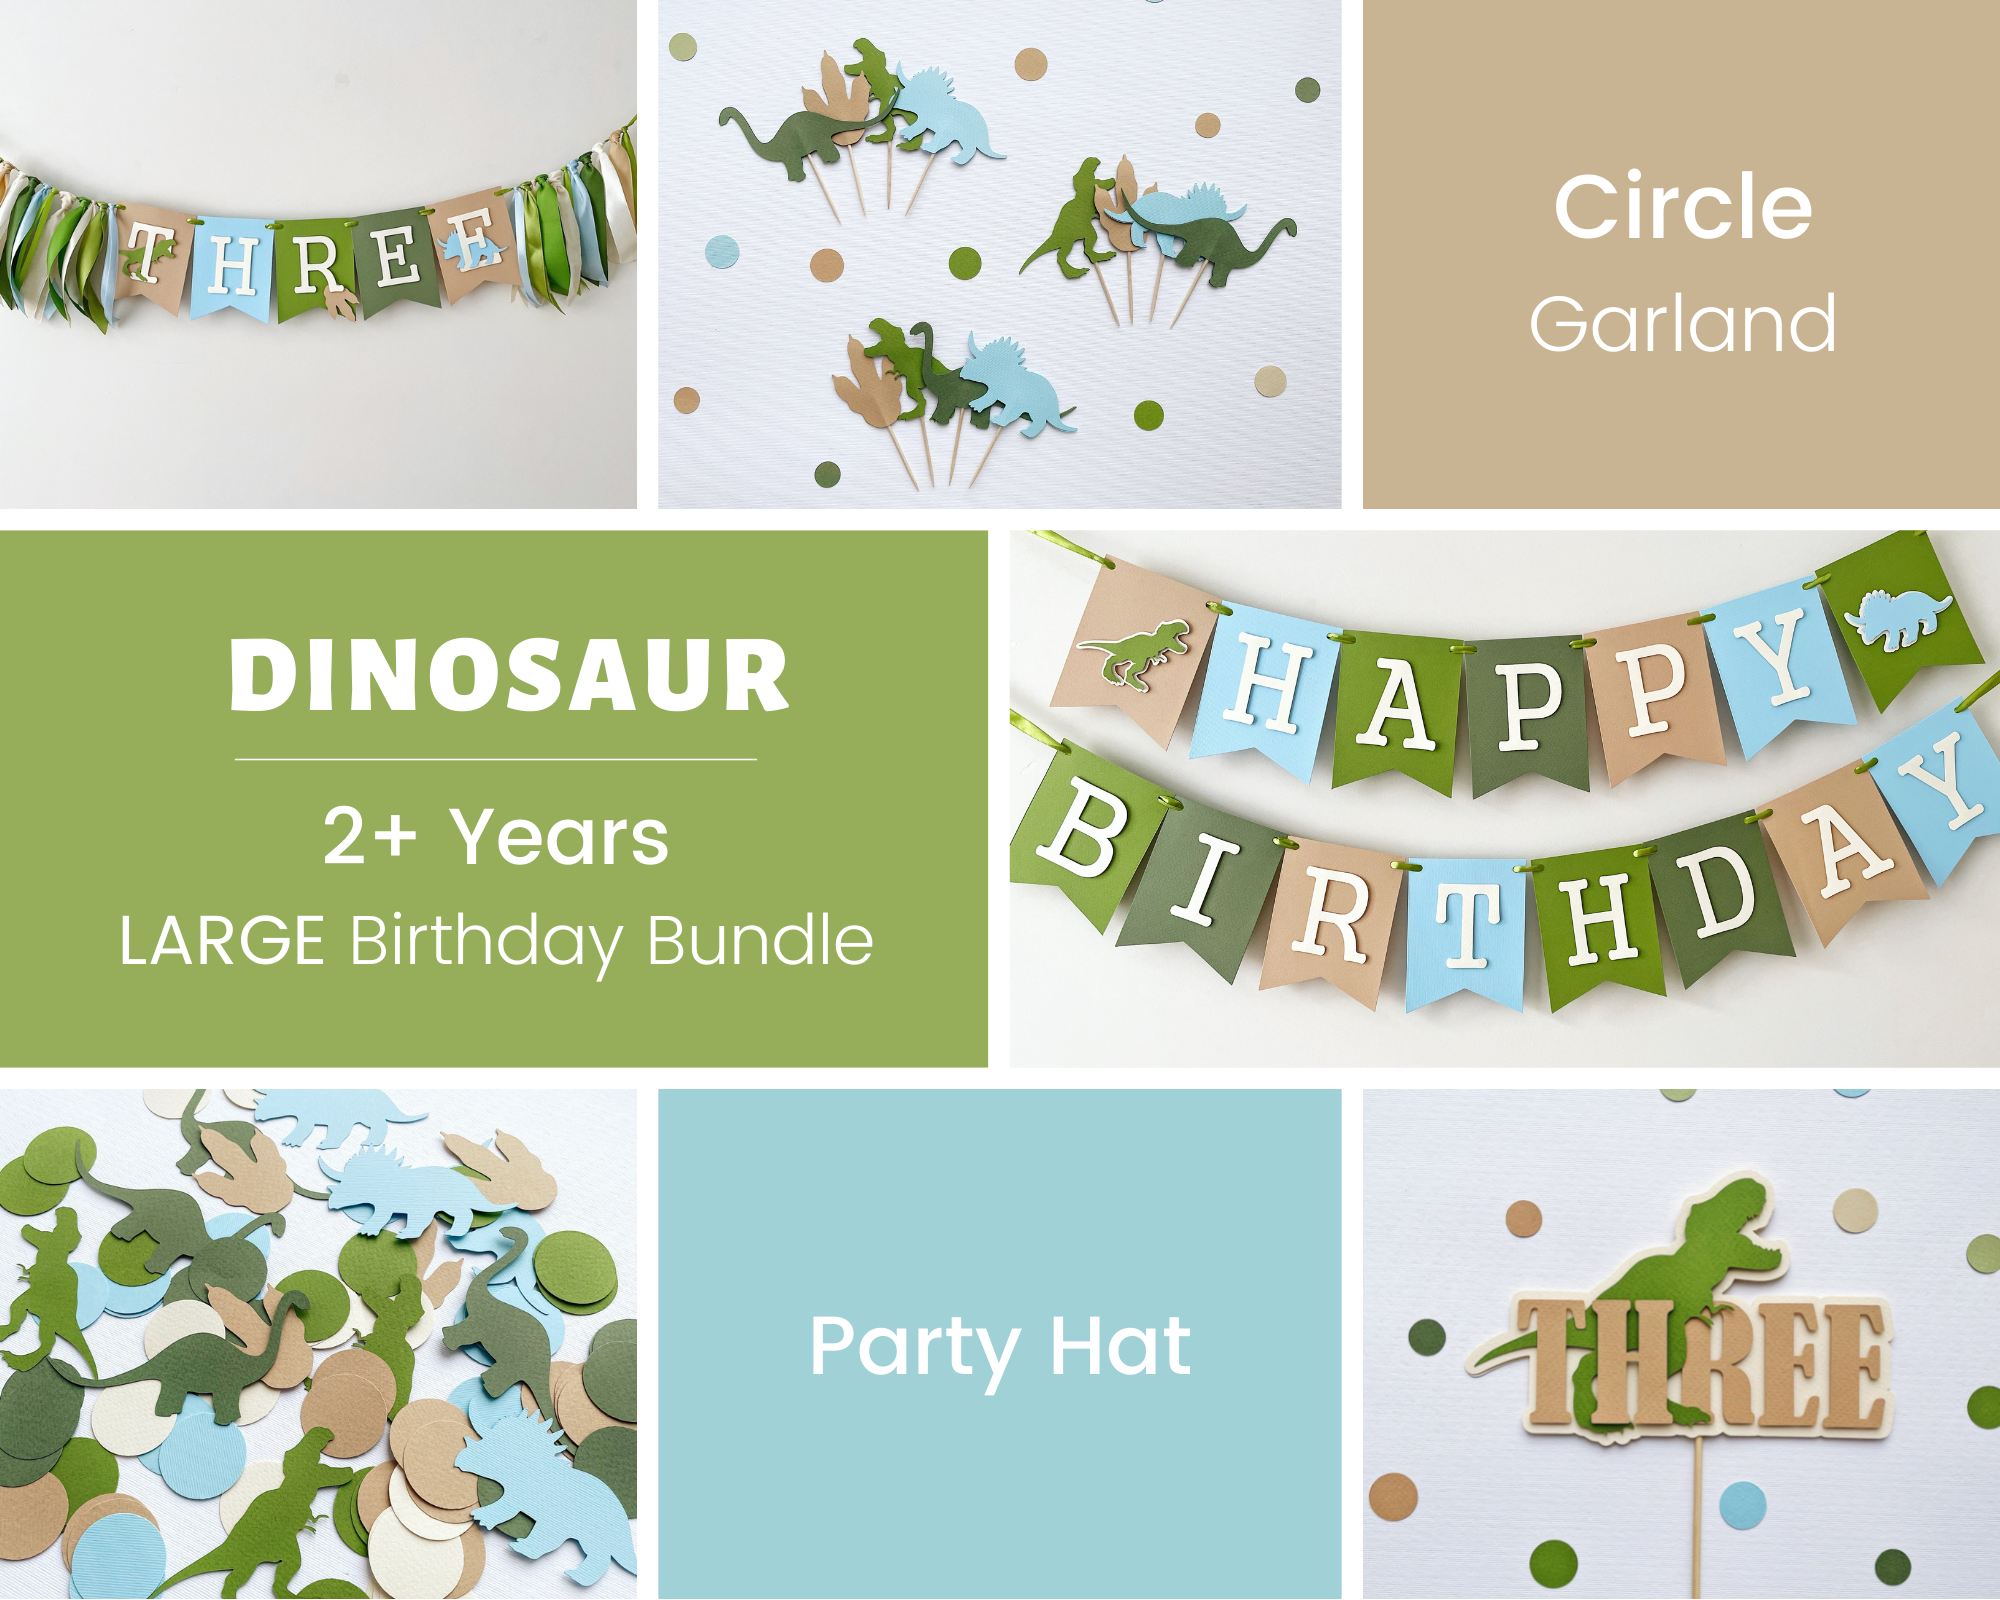 Dinosaur 2+ Years Party Bundle